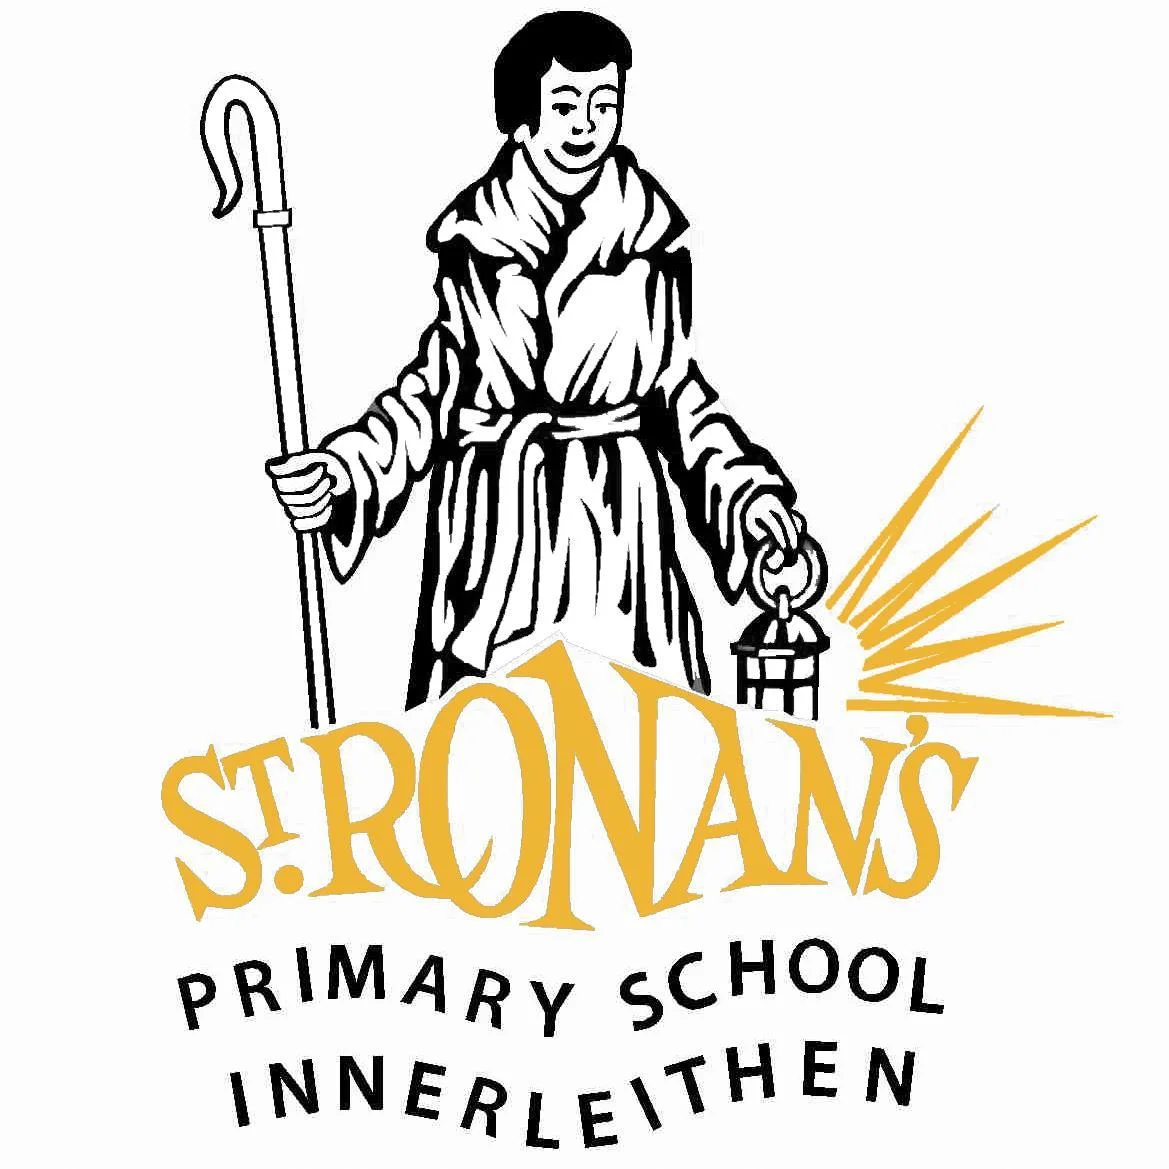 St Ronans primary school